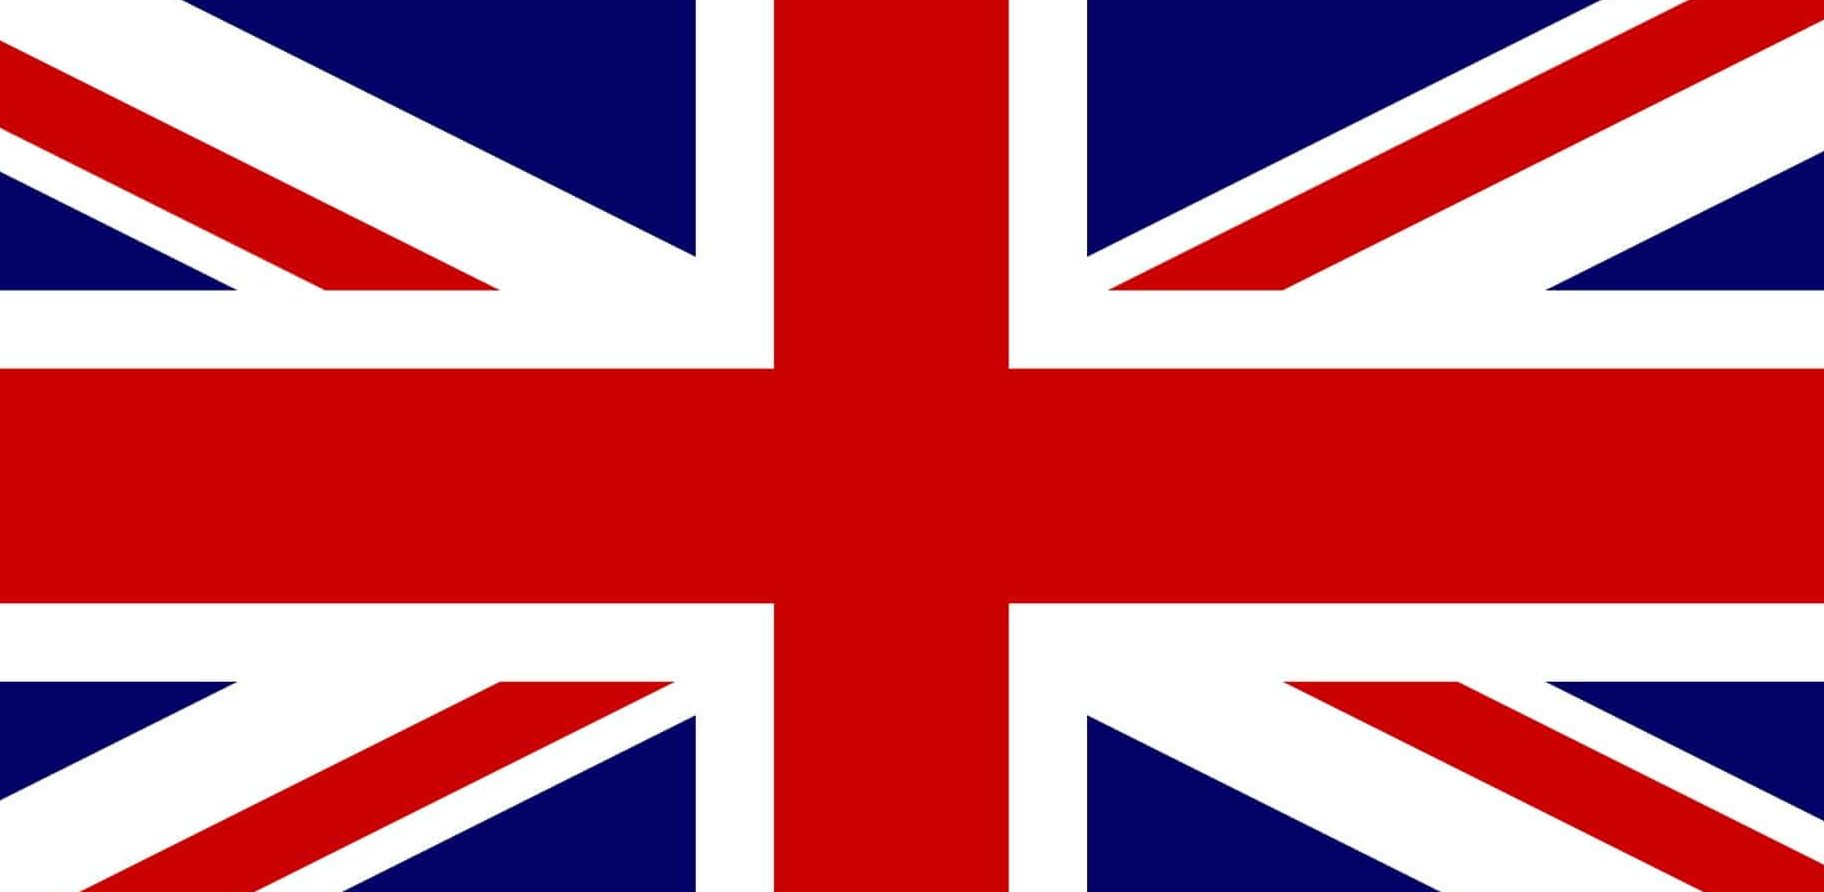 Bandera británica - union jack bandera británica - union jack - reino unido